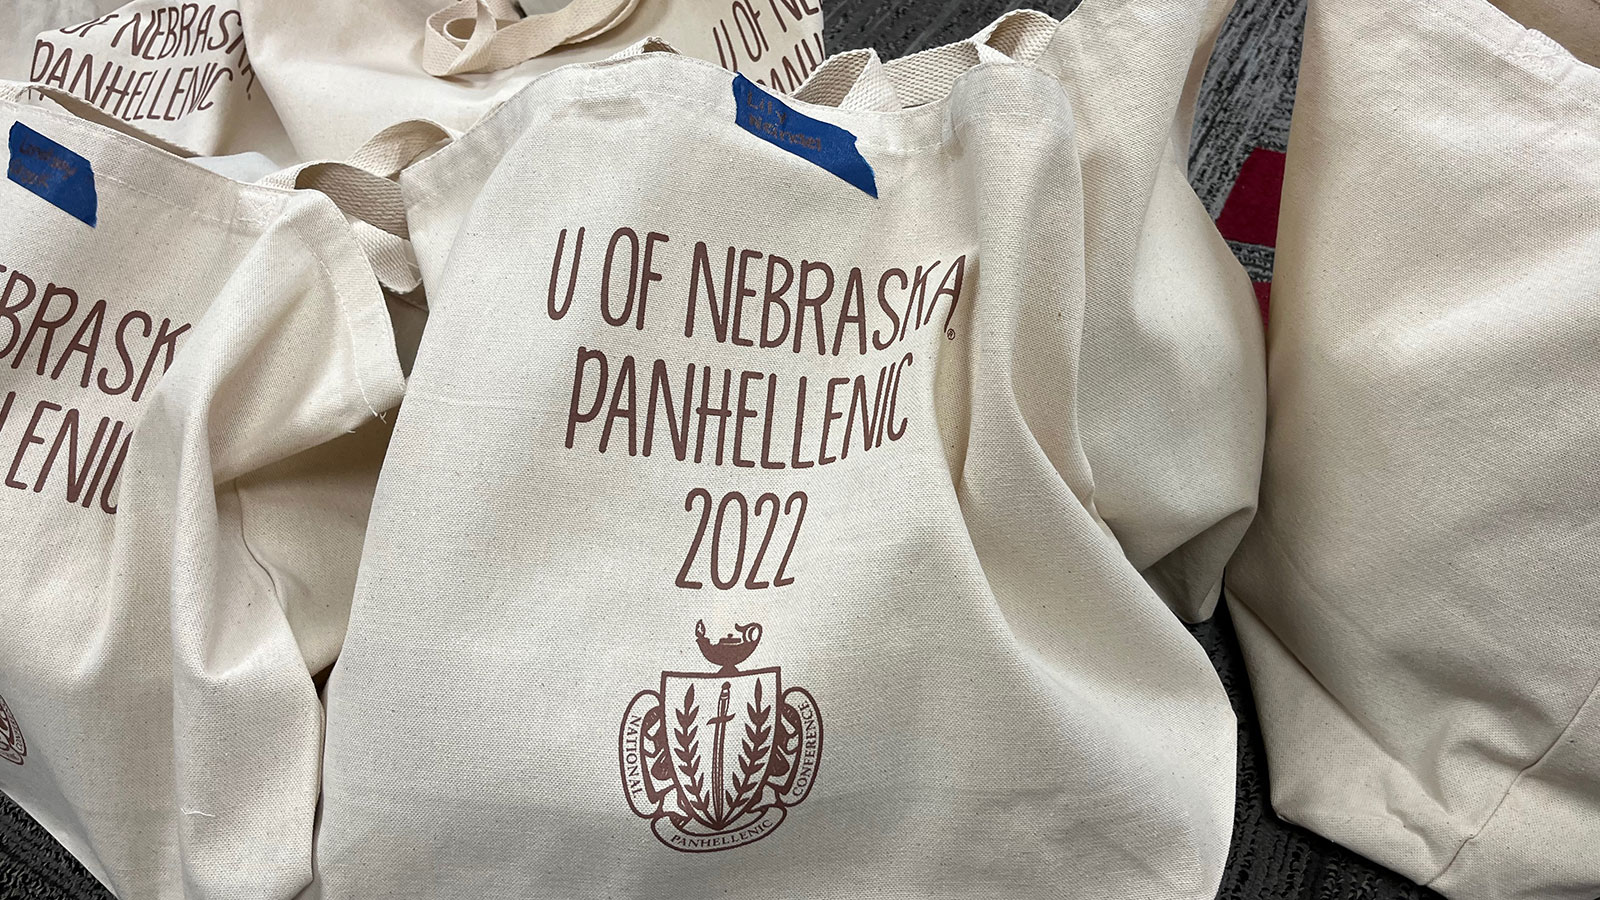 Panhellenic Sorority Recruitment 2022 bags